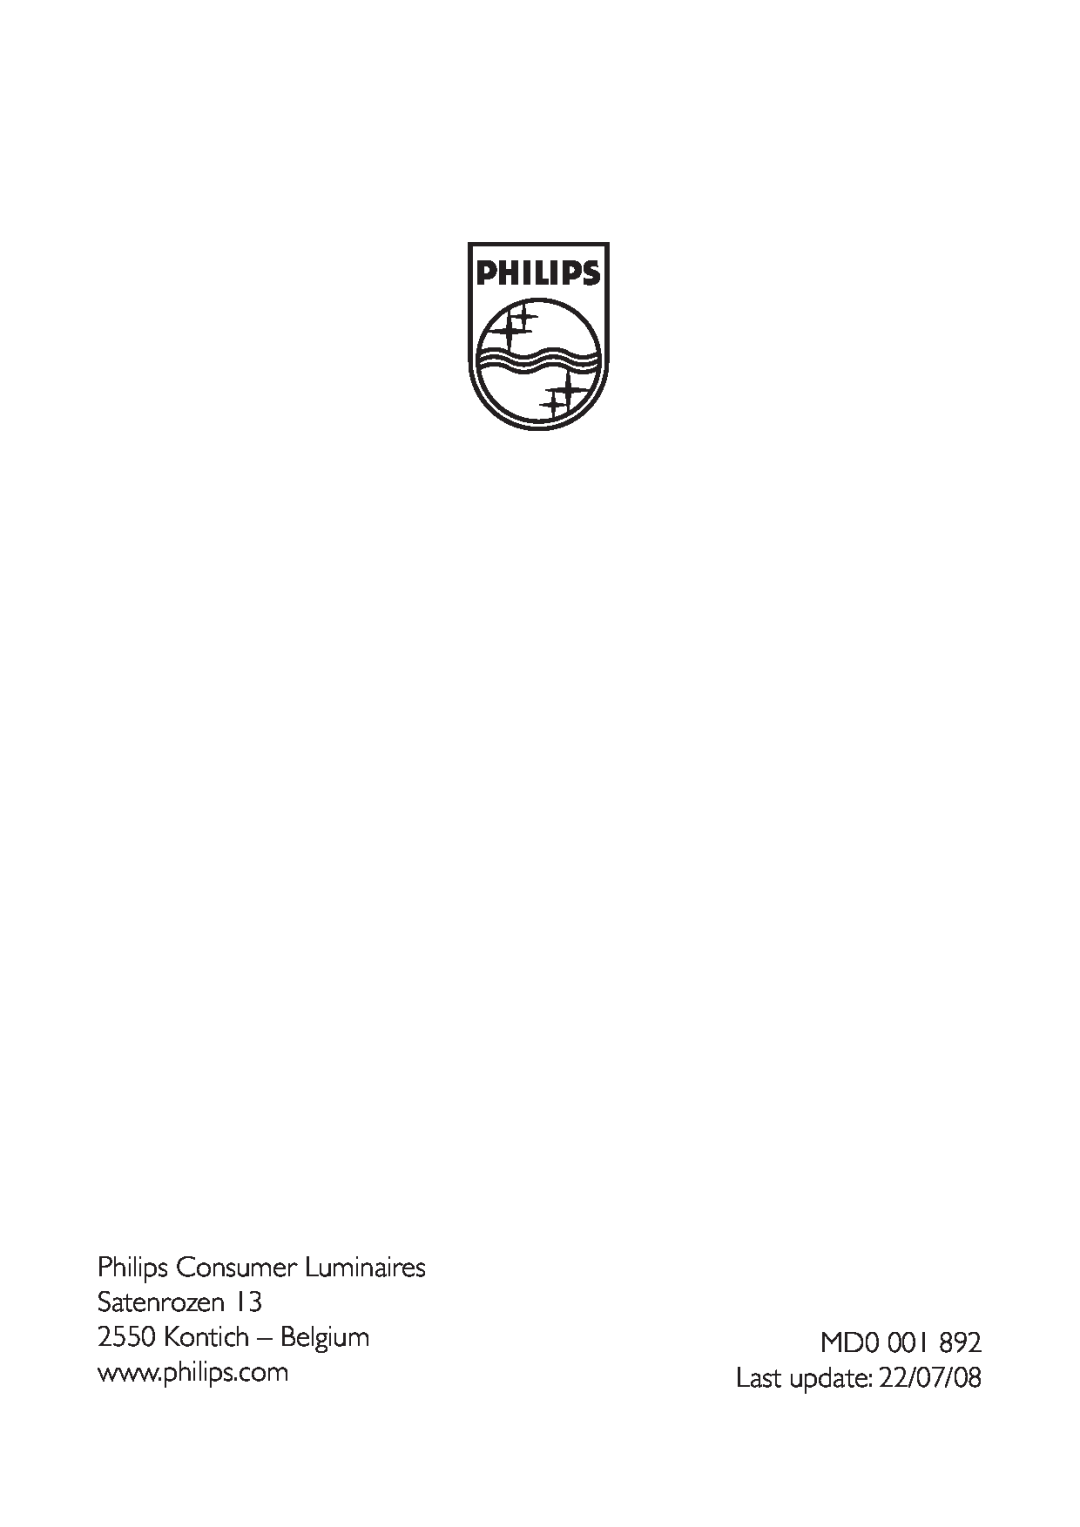 Philips 37350/31/16 user manual Philips Consumer Luminaires, Satenrozen, Kontich – Belgium, MD0 001 